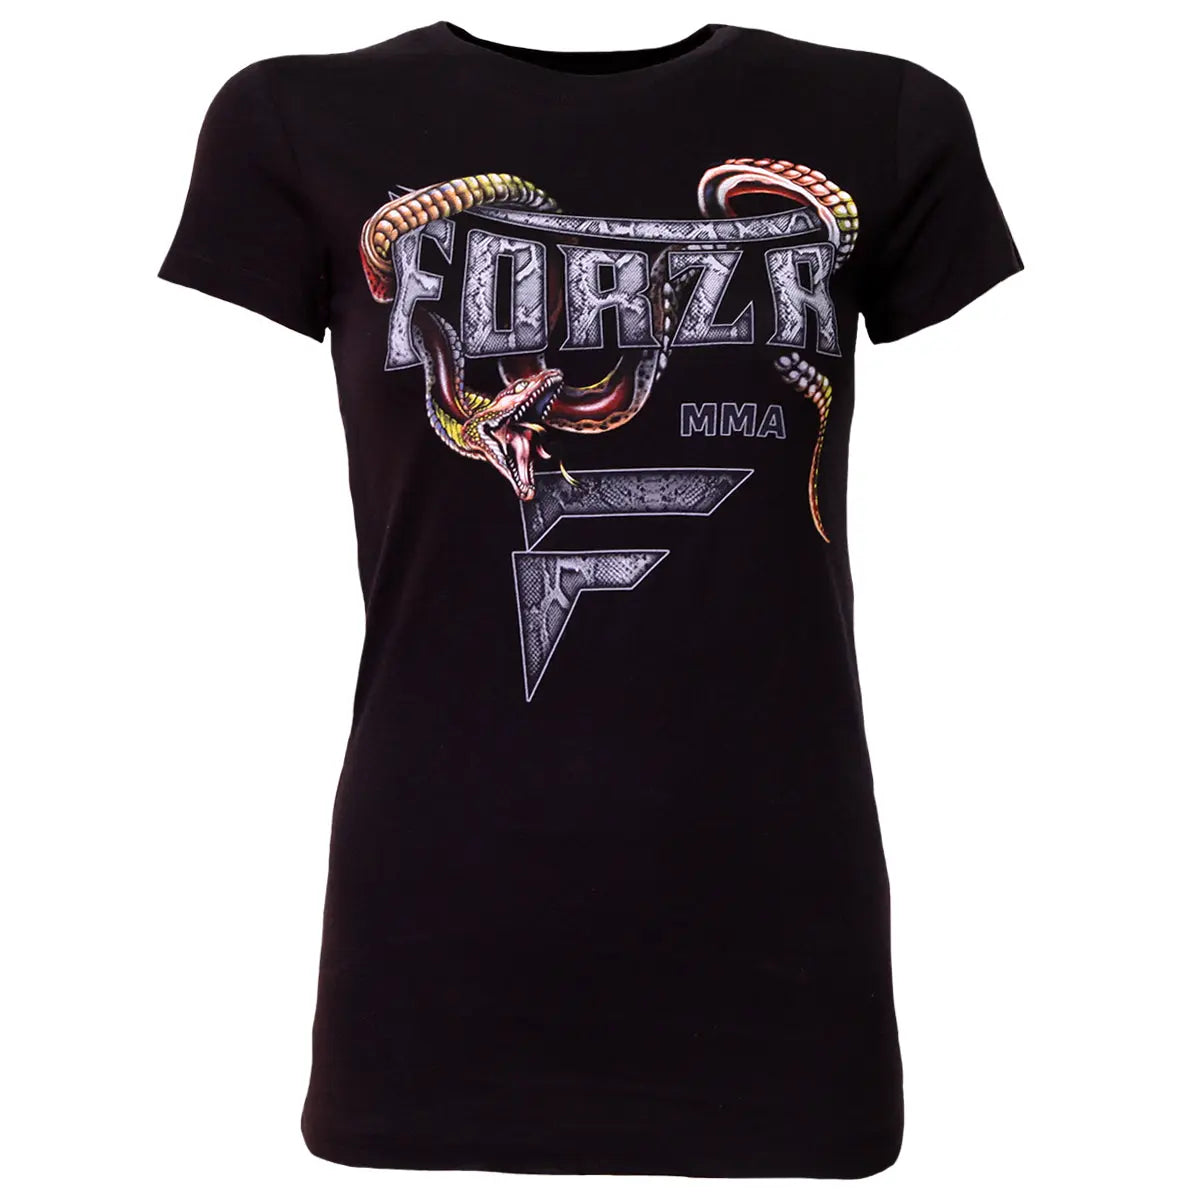 Forza Sports Women's "Slither" MMA T-Shirt - Black Forza Sports